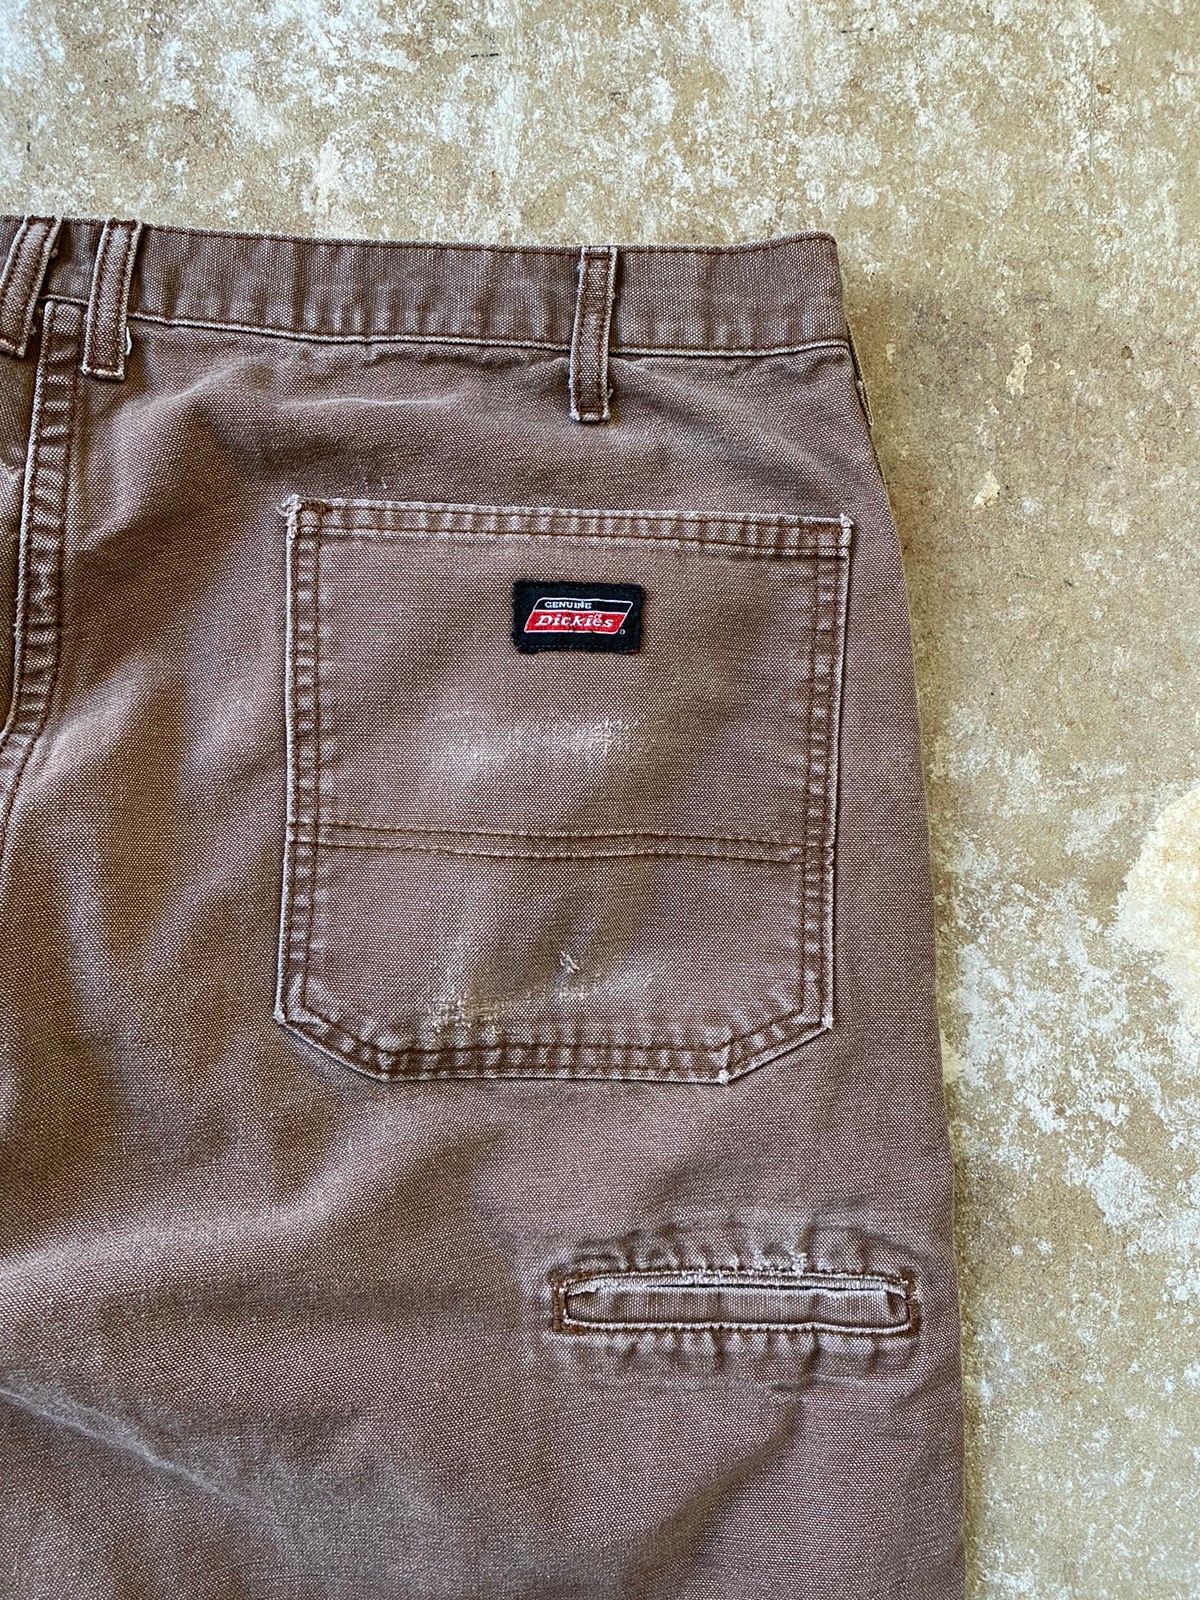 Vintage Vintage 90’s Brown Dickies Carpenter Pants Size US 36 / EU 52 - 5 Preview